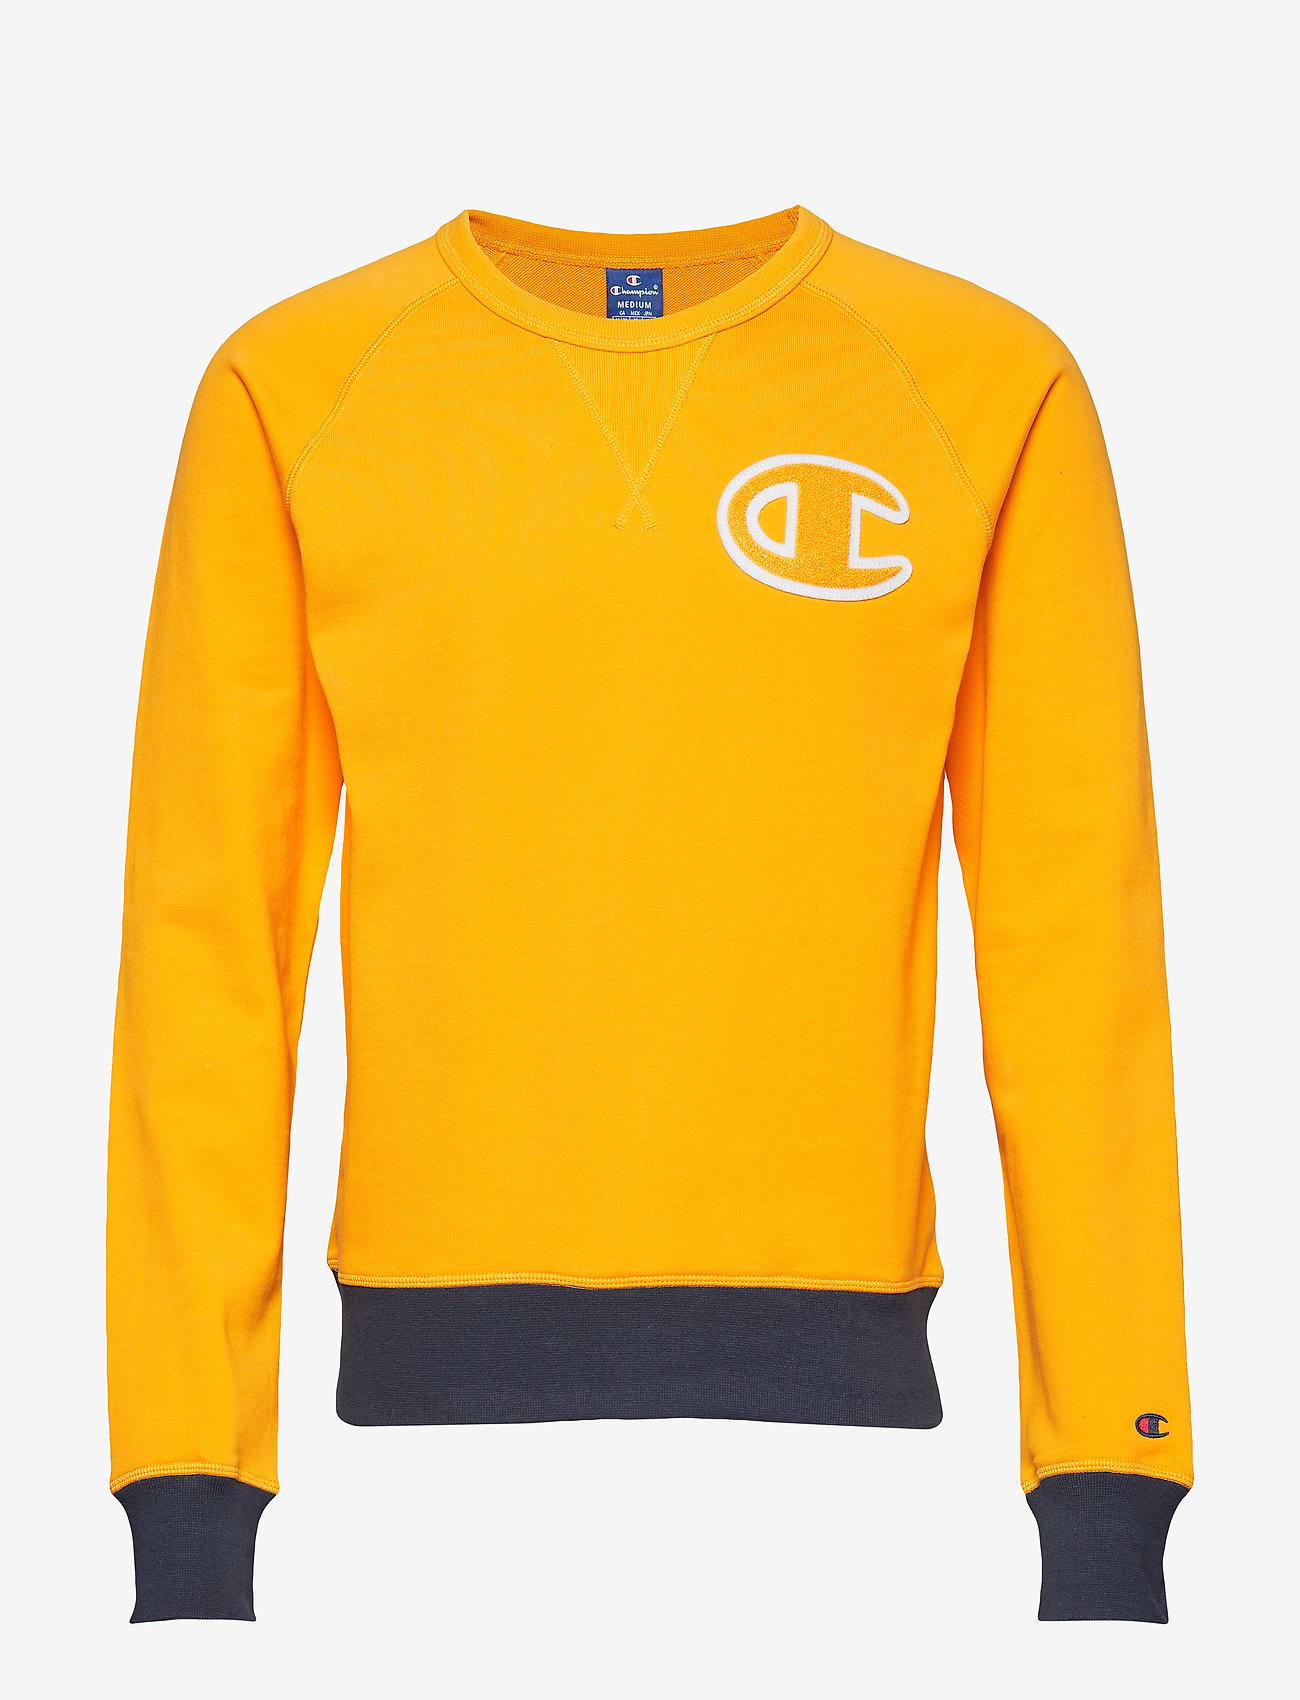 champion crewneck sweatshirt yellow